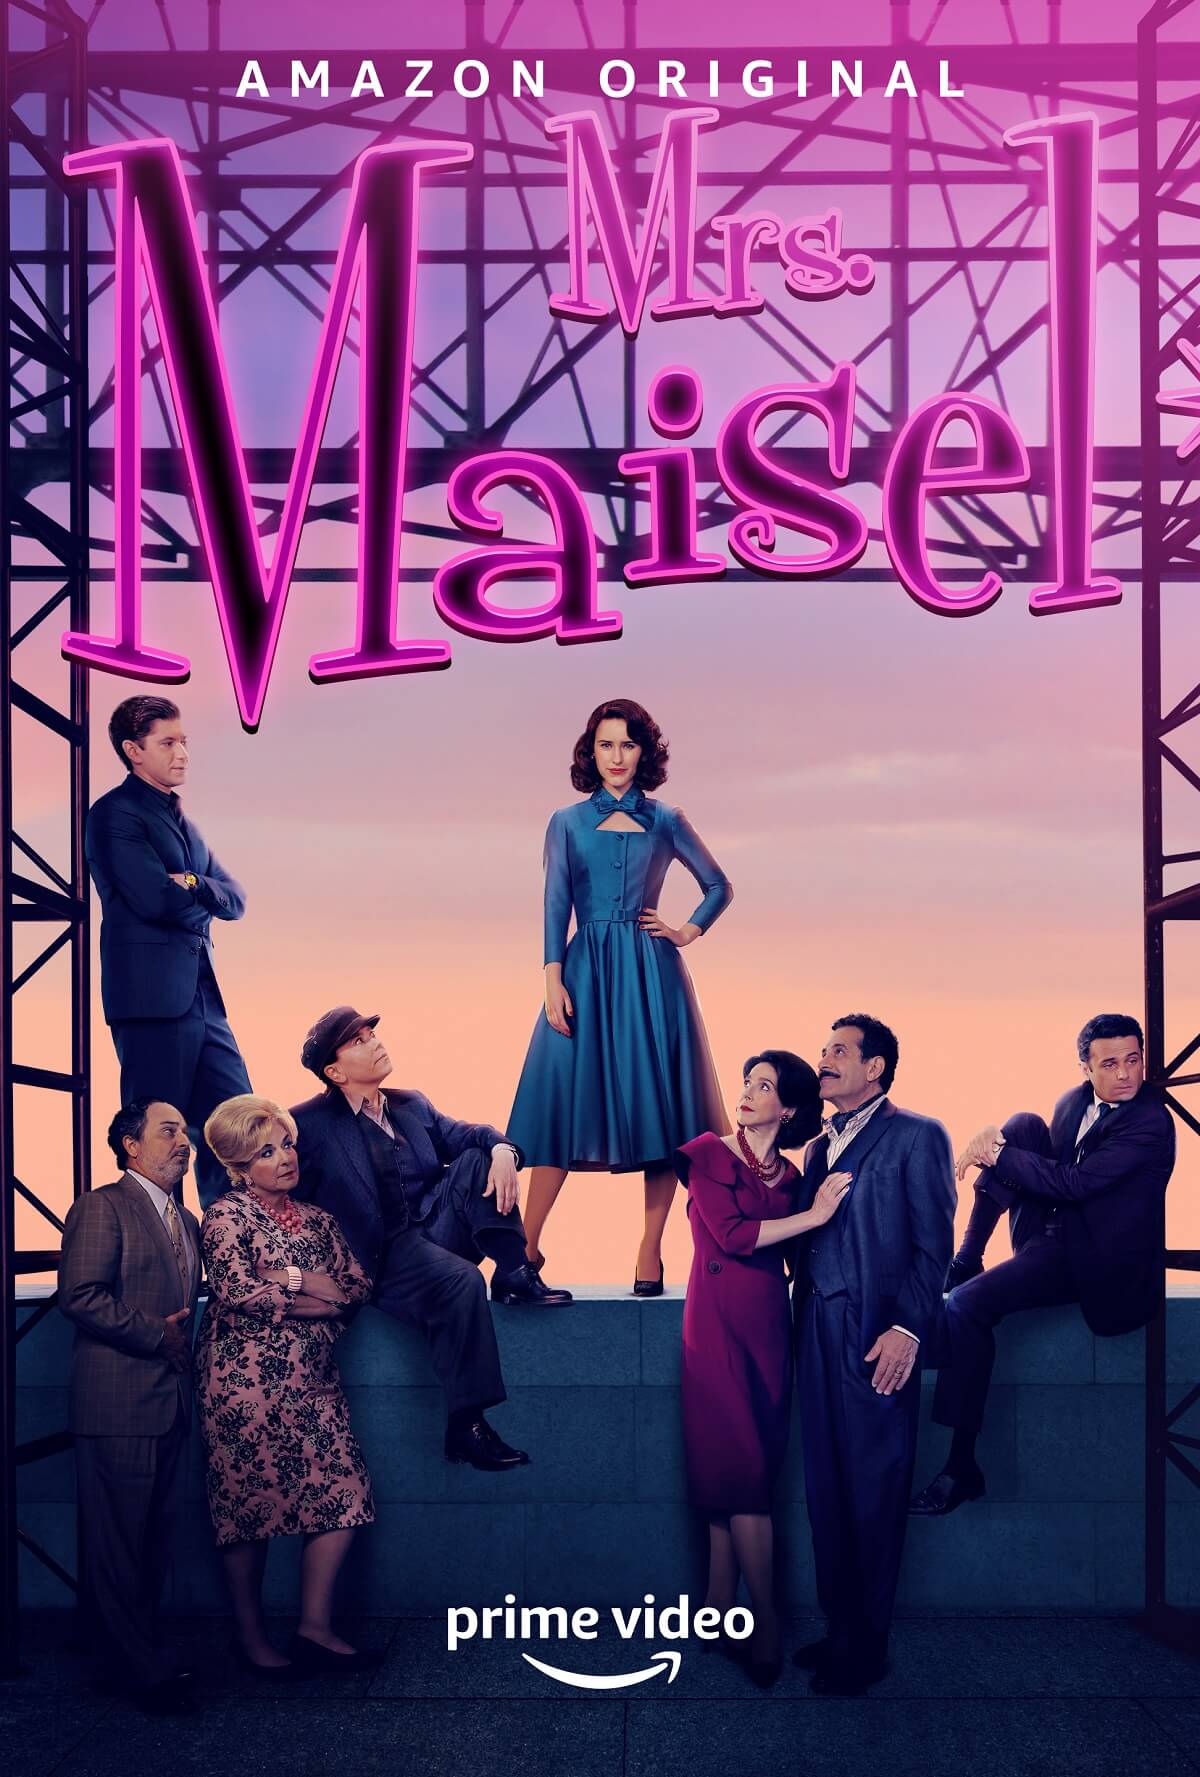 [TV] The Marvelous Mrs. Maisel Season 4 (Prime)